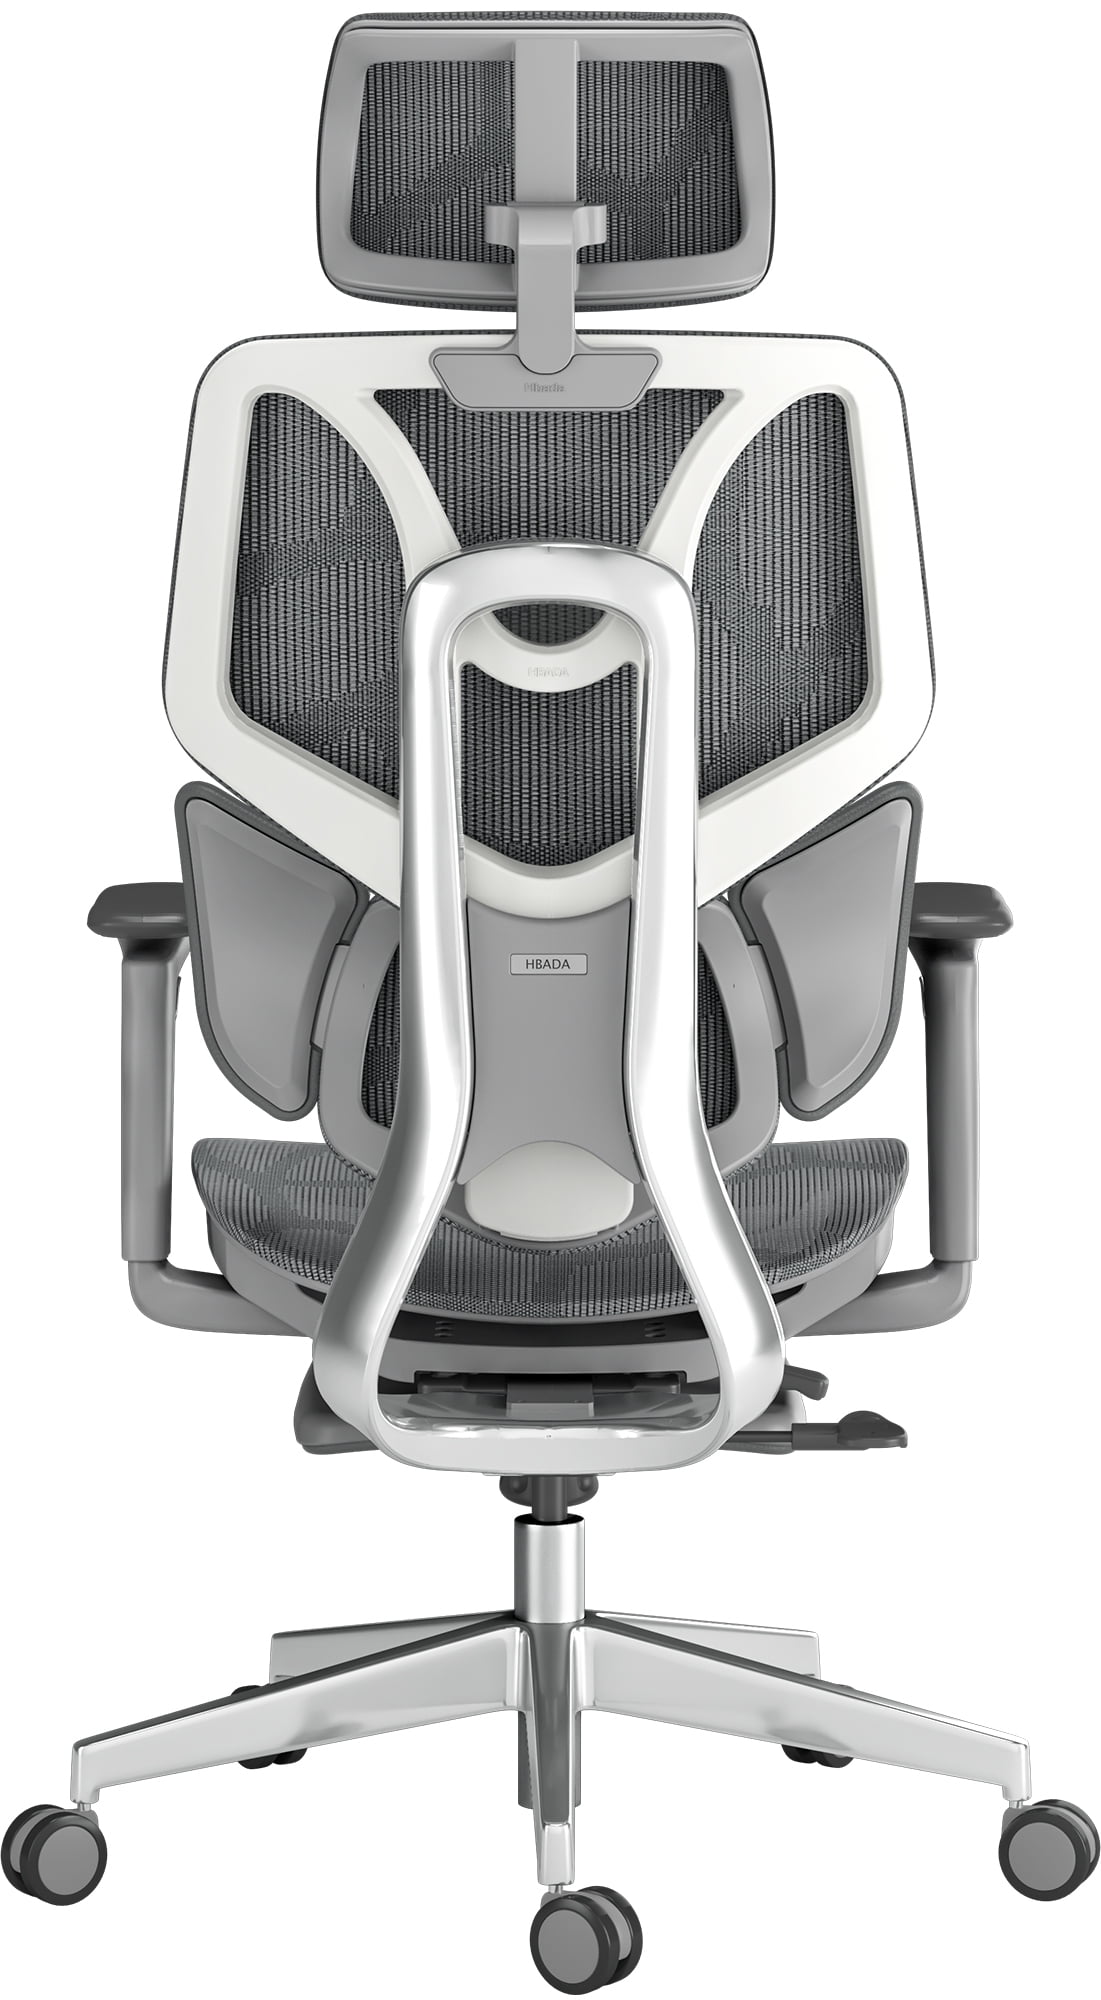 Hbada Ergonomic Office Chair Elastic Adaptive Adjustment Back